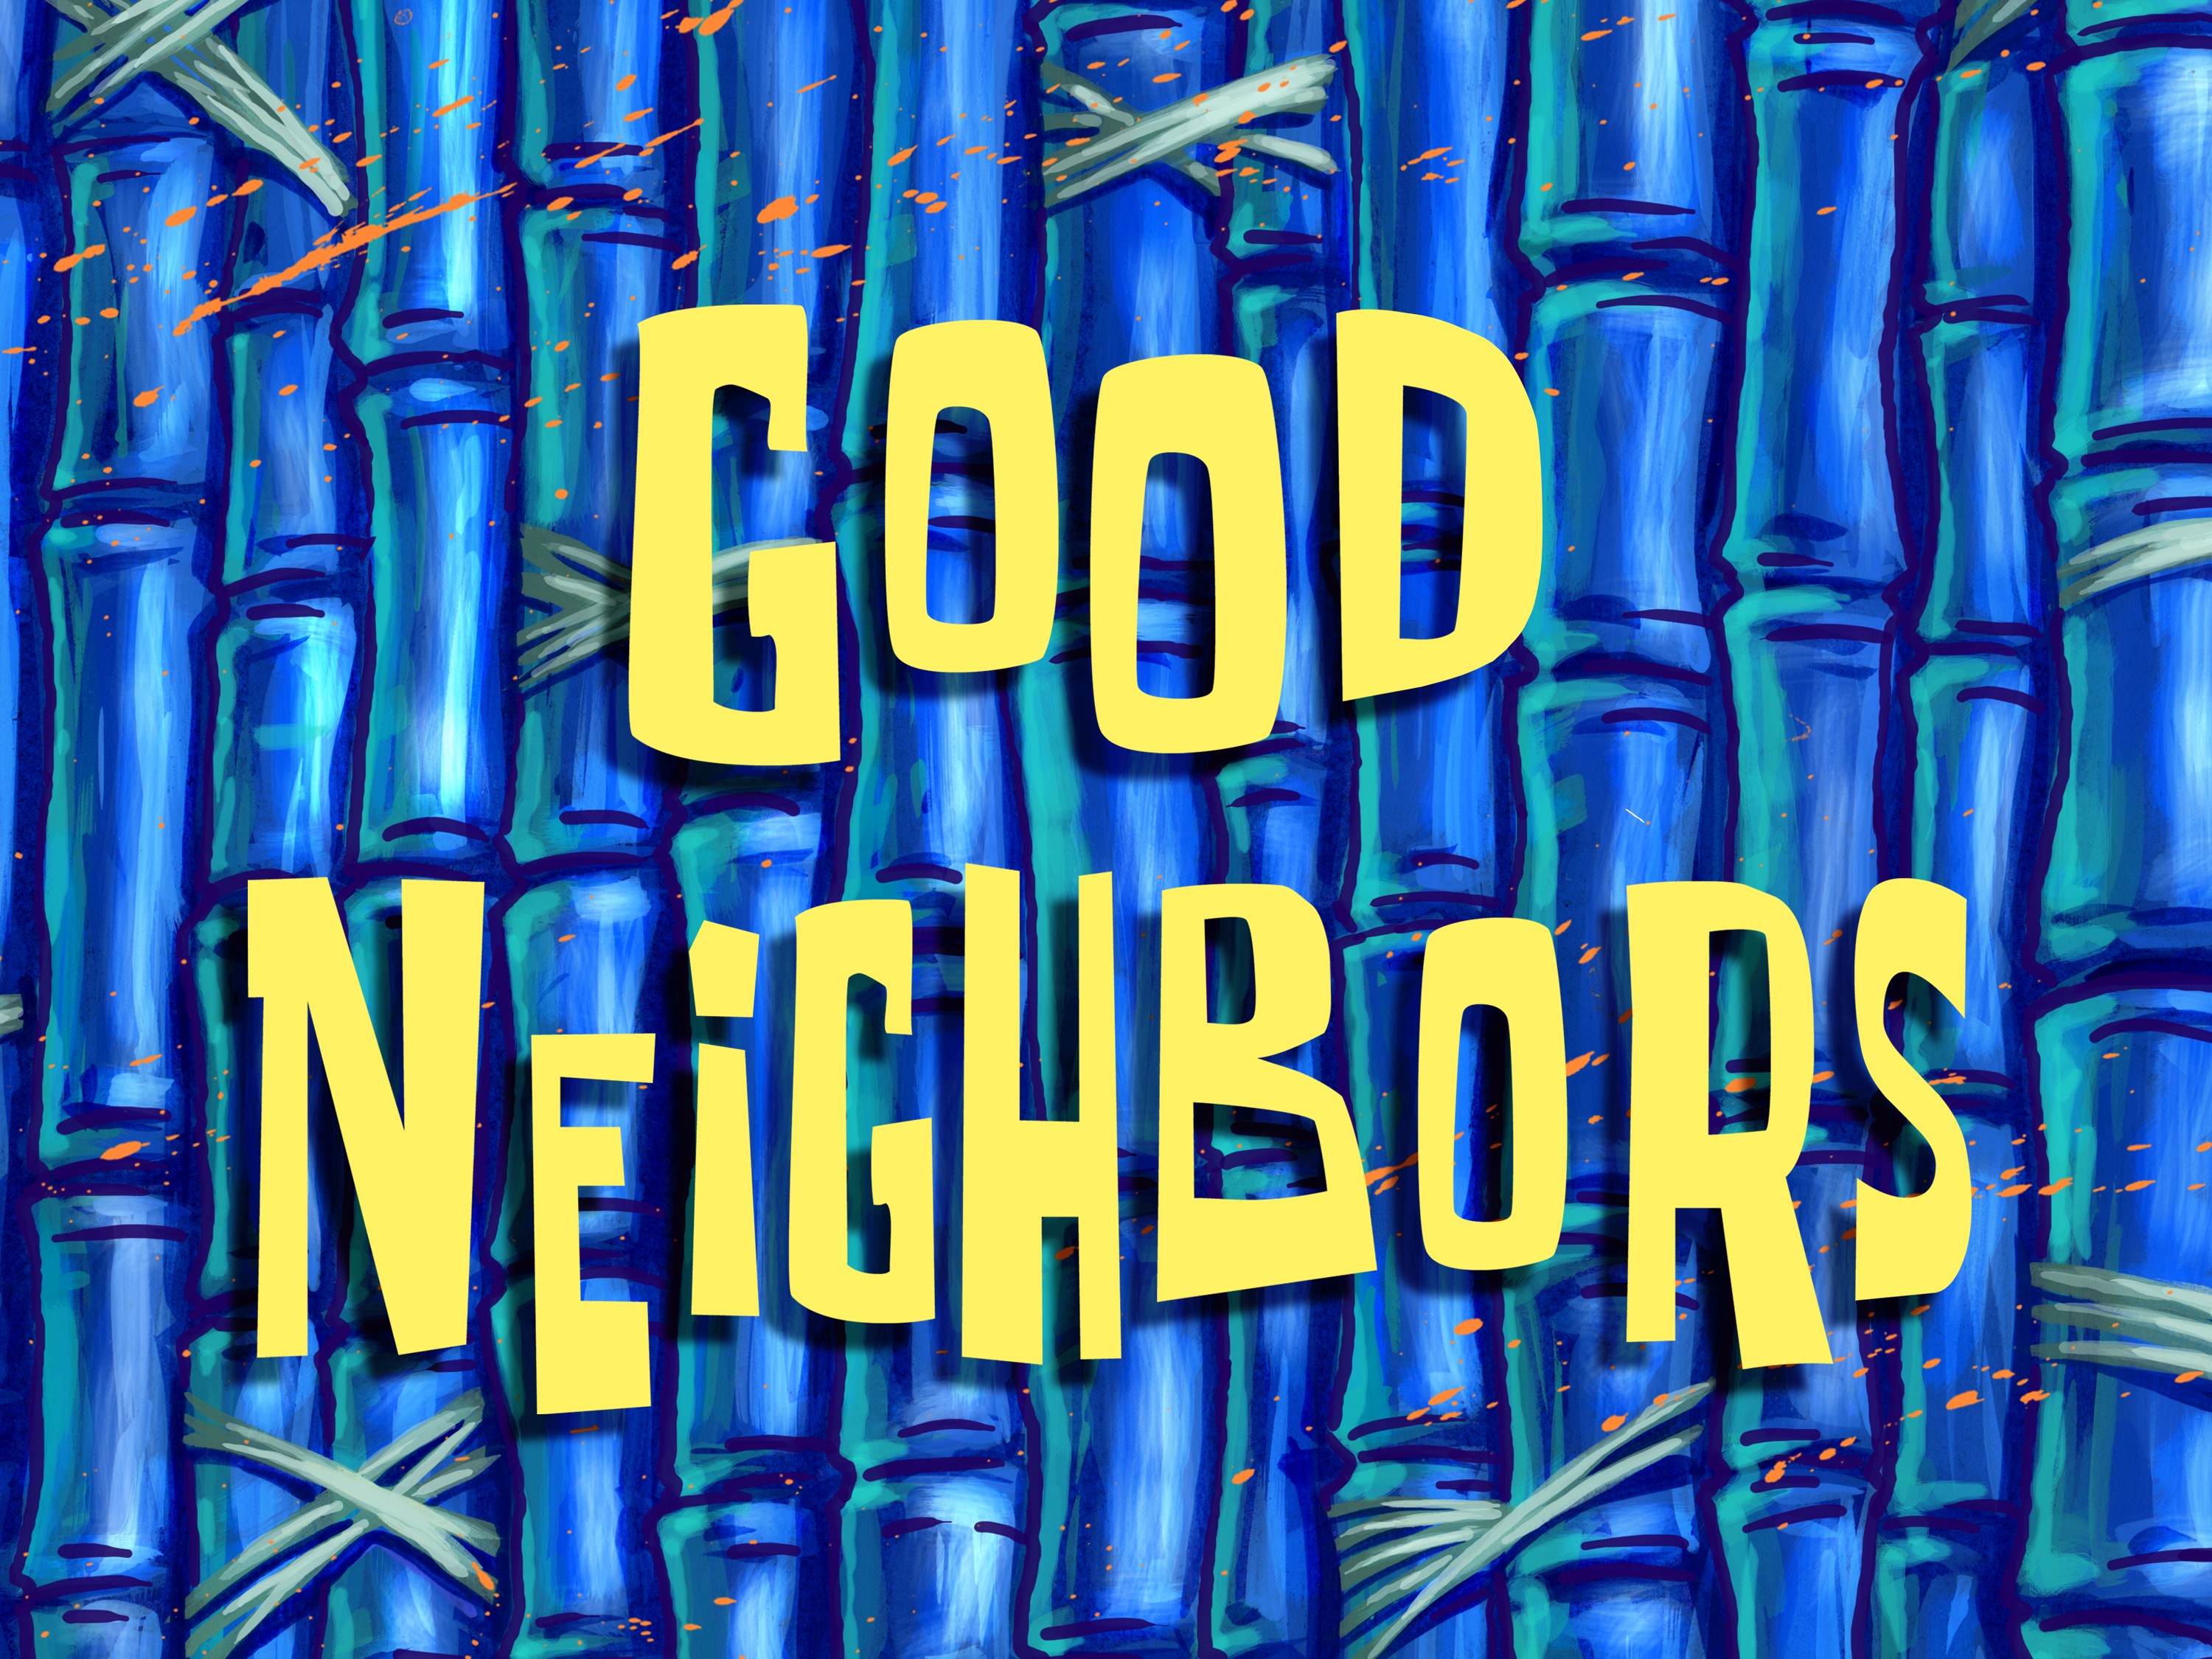 11 Best Neighbor quotes ideas  neighbor quotes, quotes, good neighbor